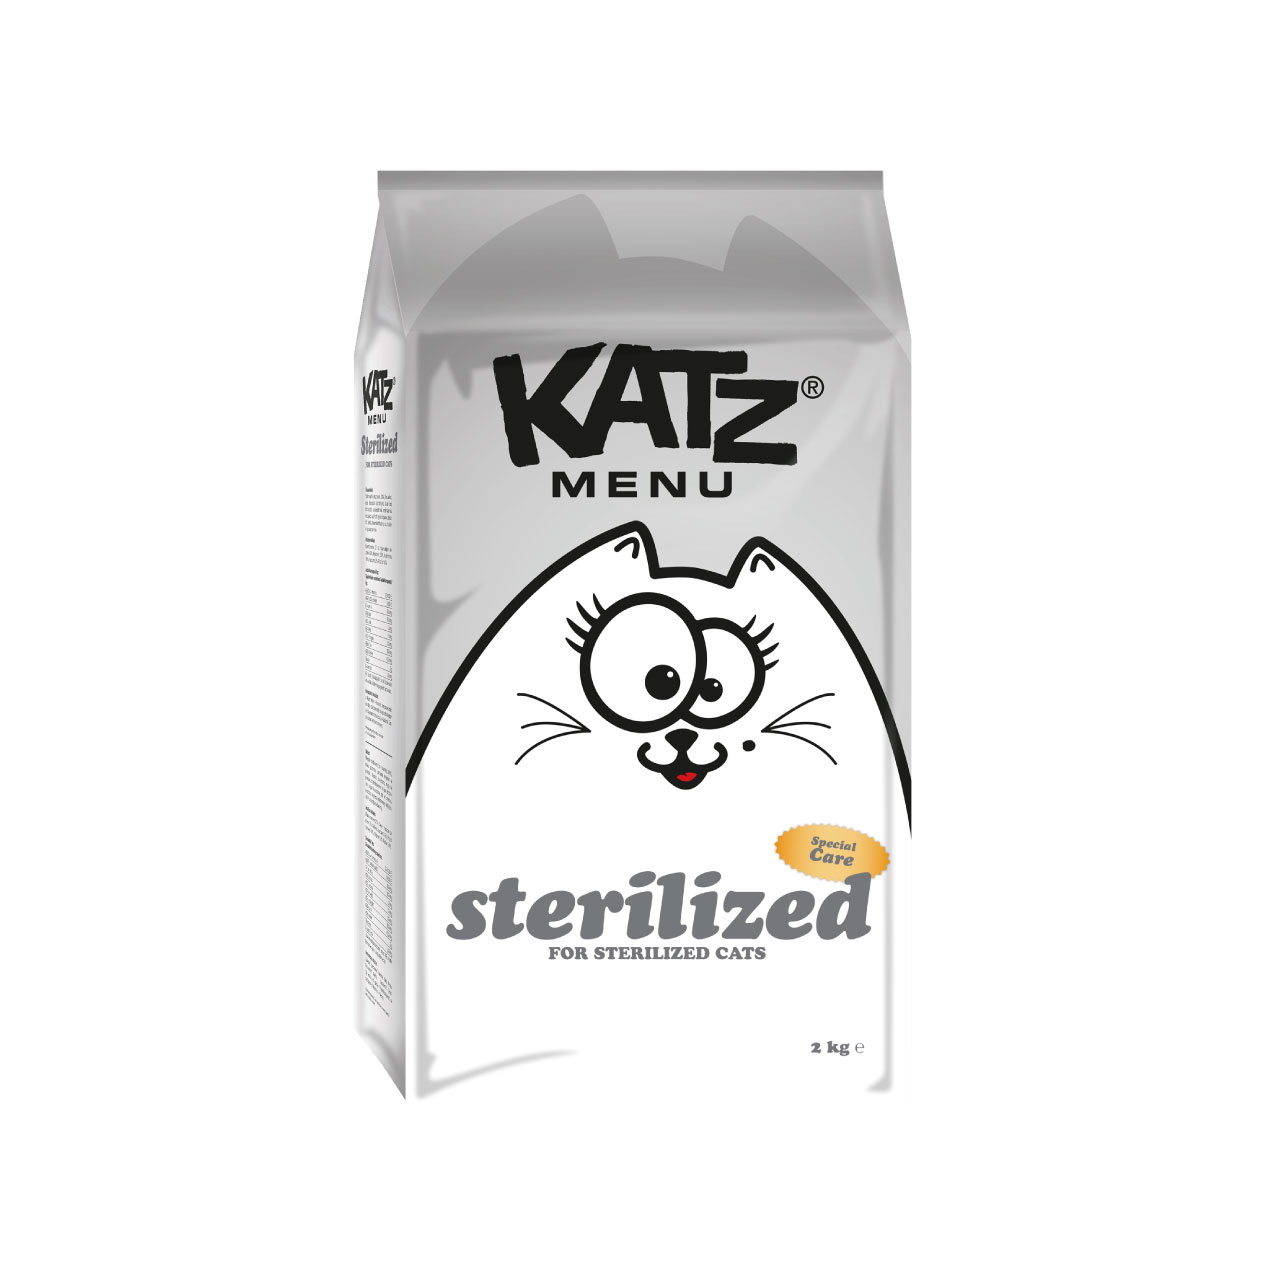 sterilized-2kg.jpg